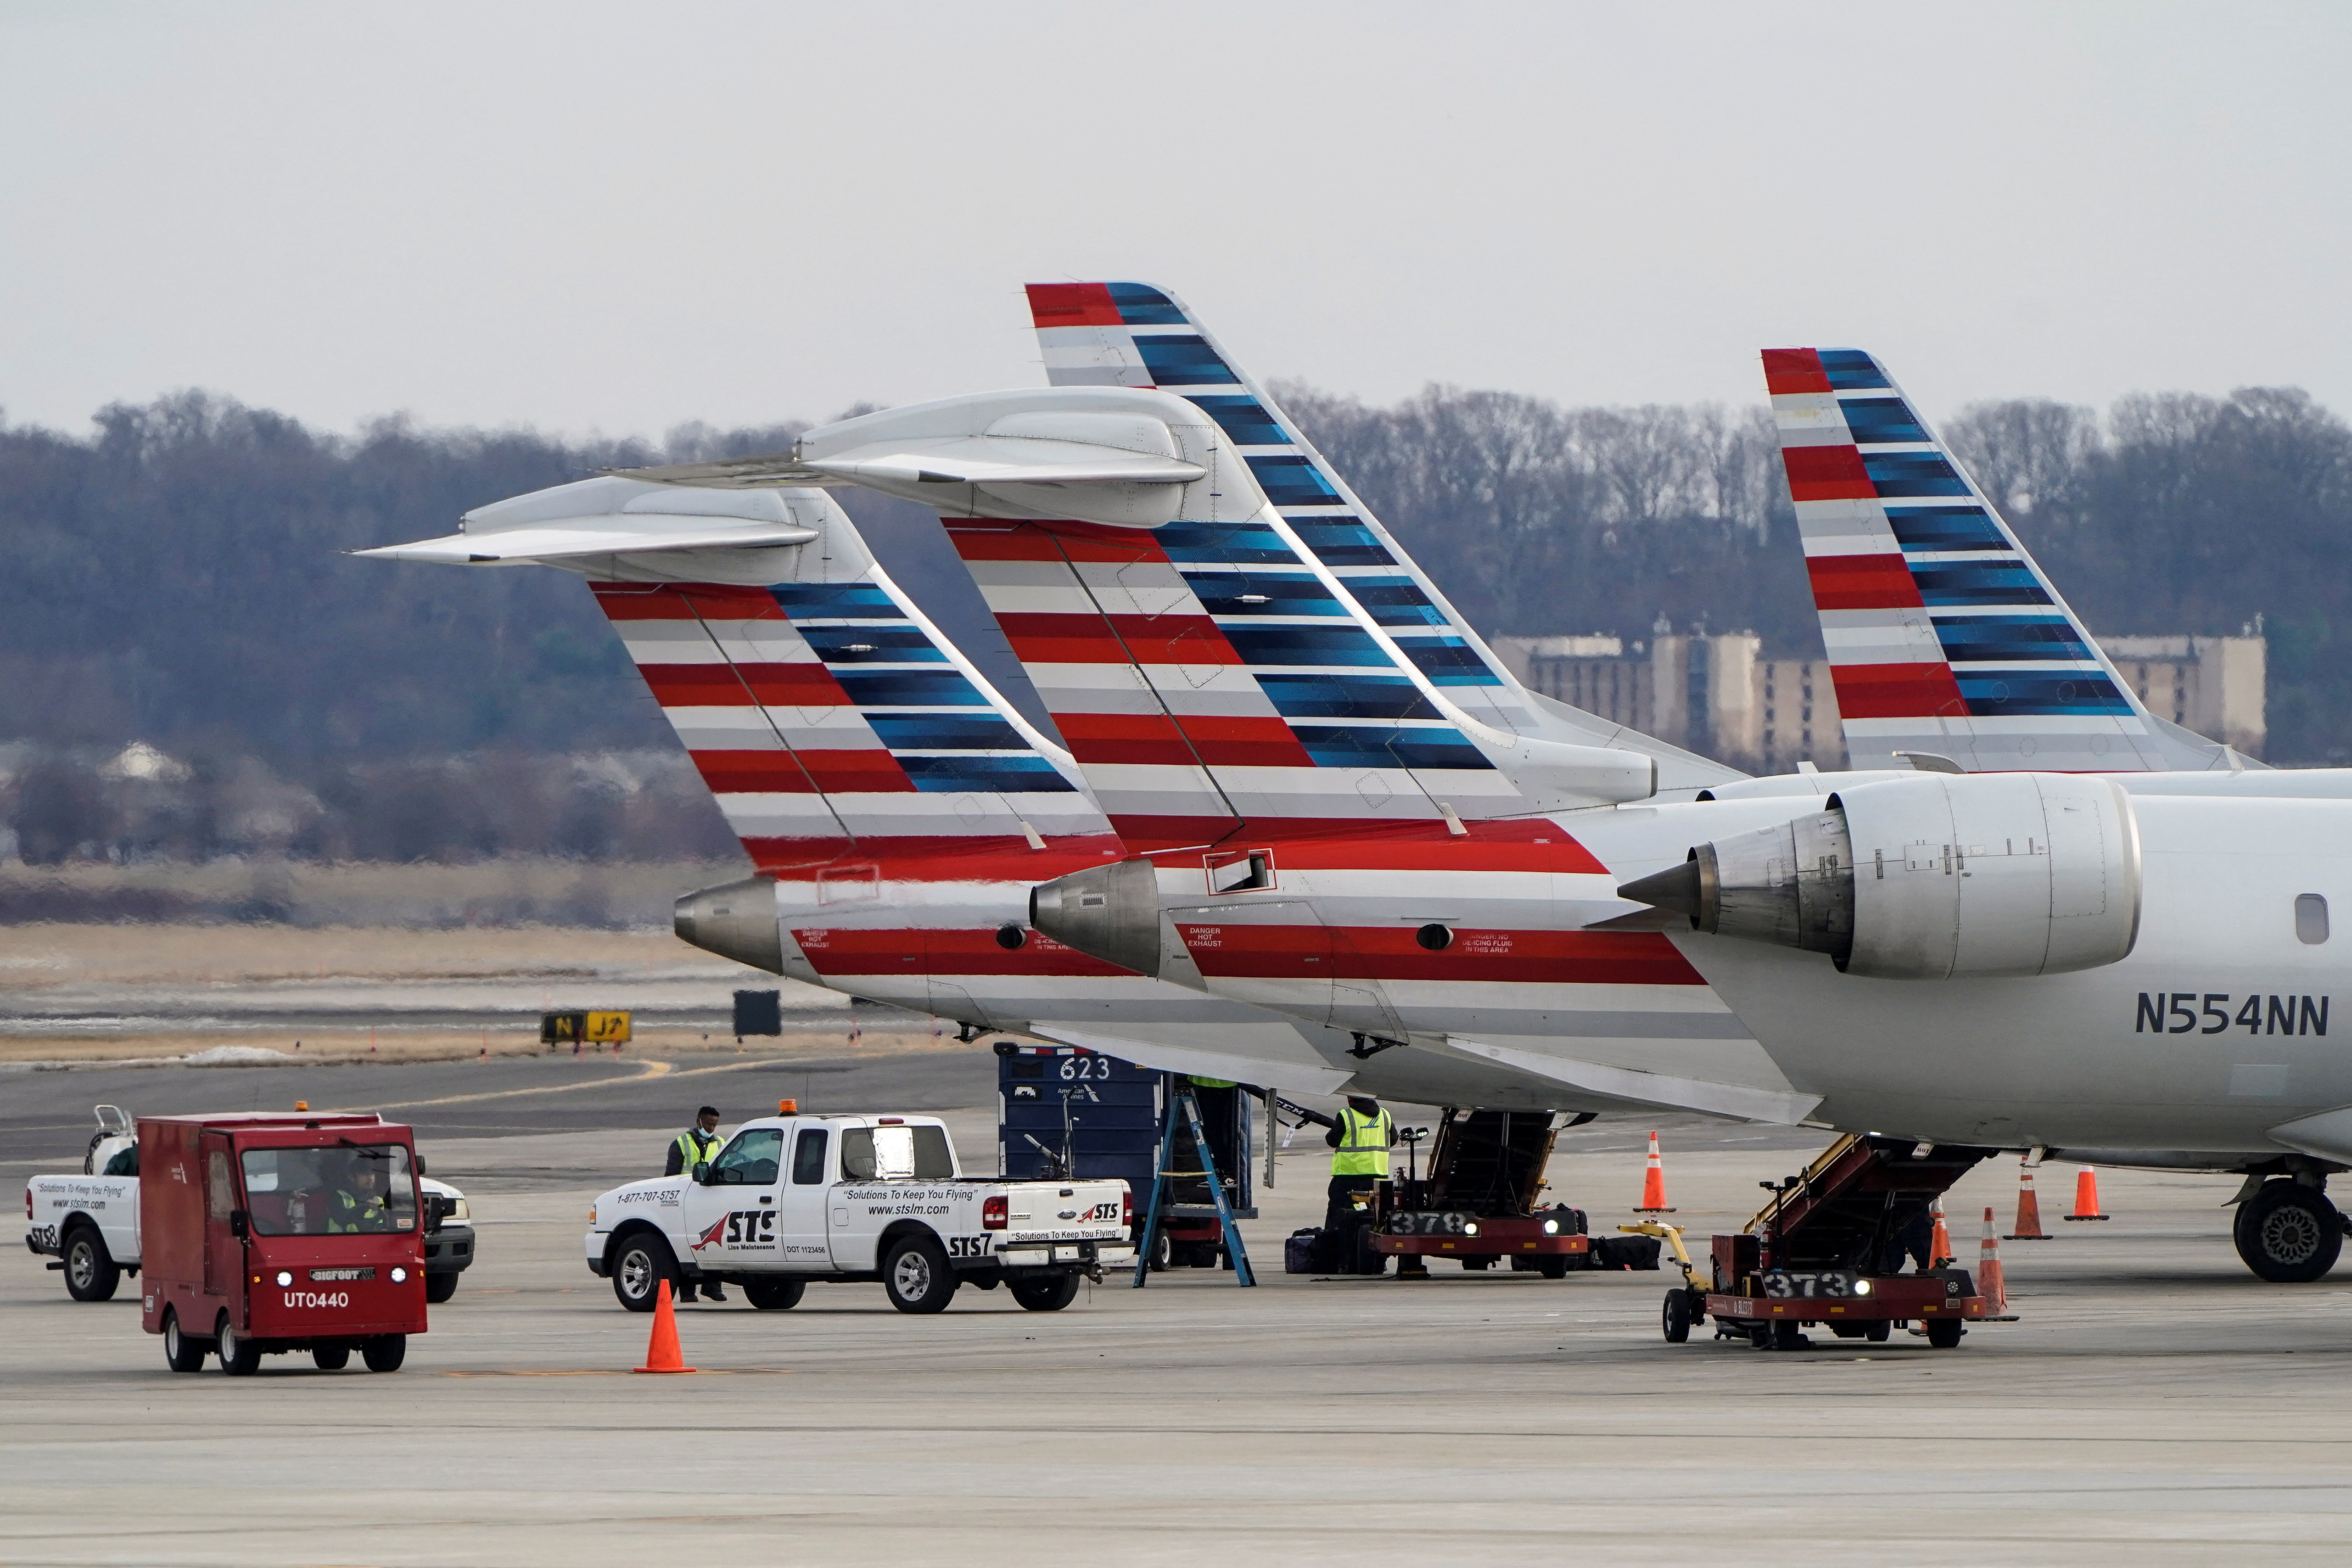 Grounds crews work around American Airlines aircraft at Reagan National Airport in Arlington, Virginia